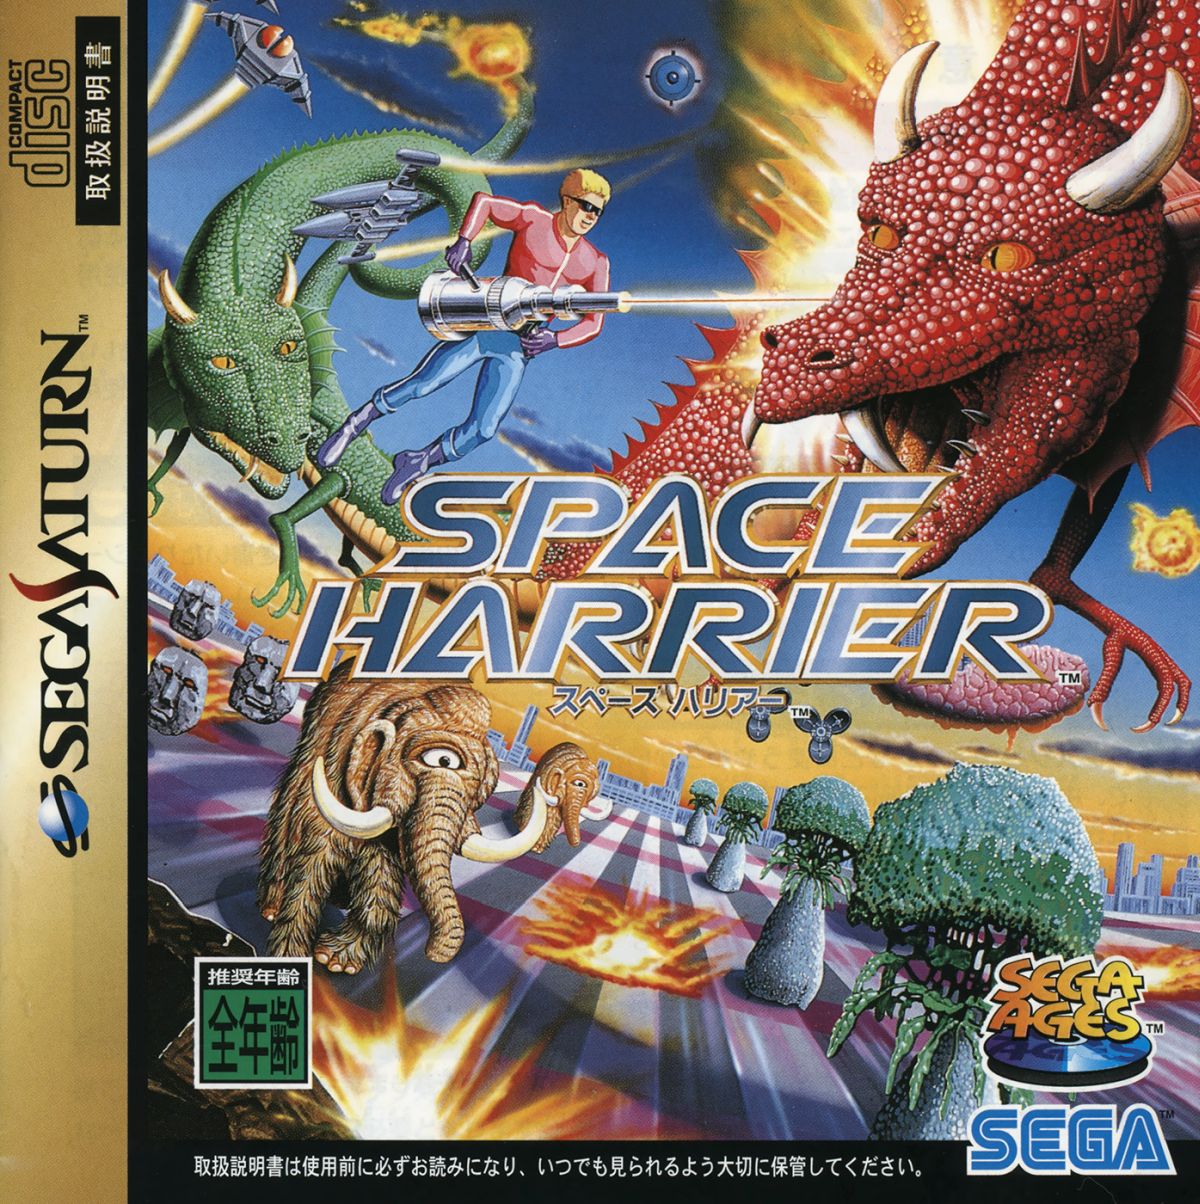 Capa do jogo Sega Ages Vol.2 Space Harrier